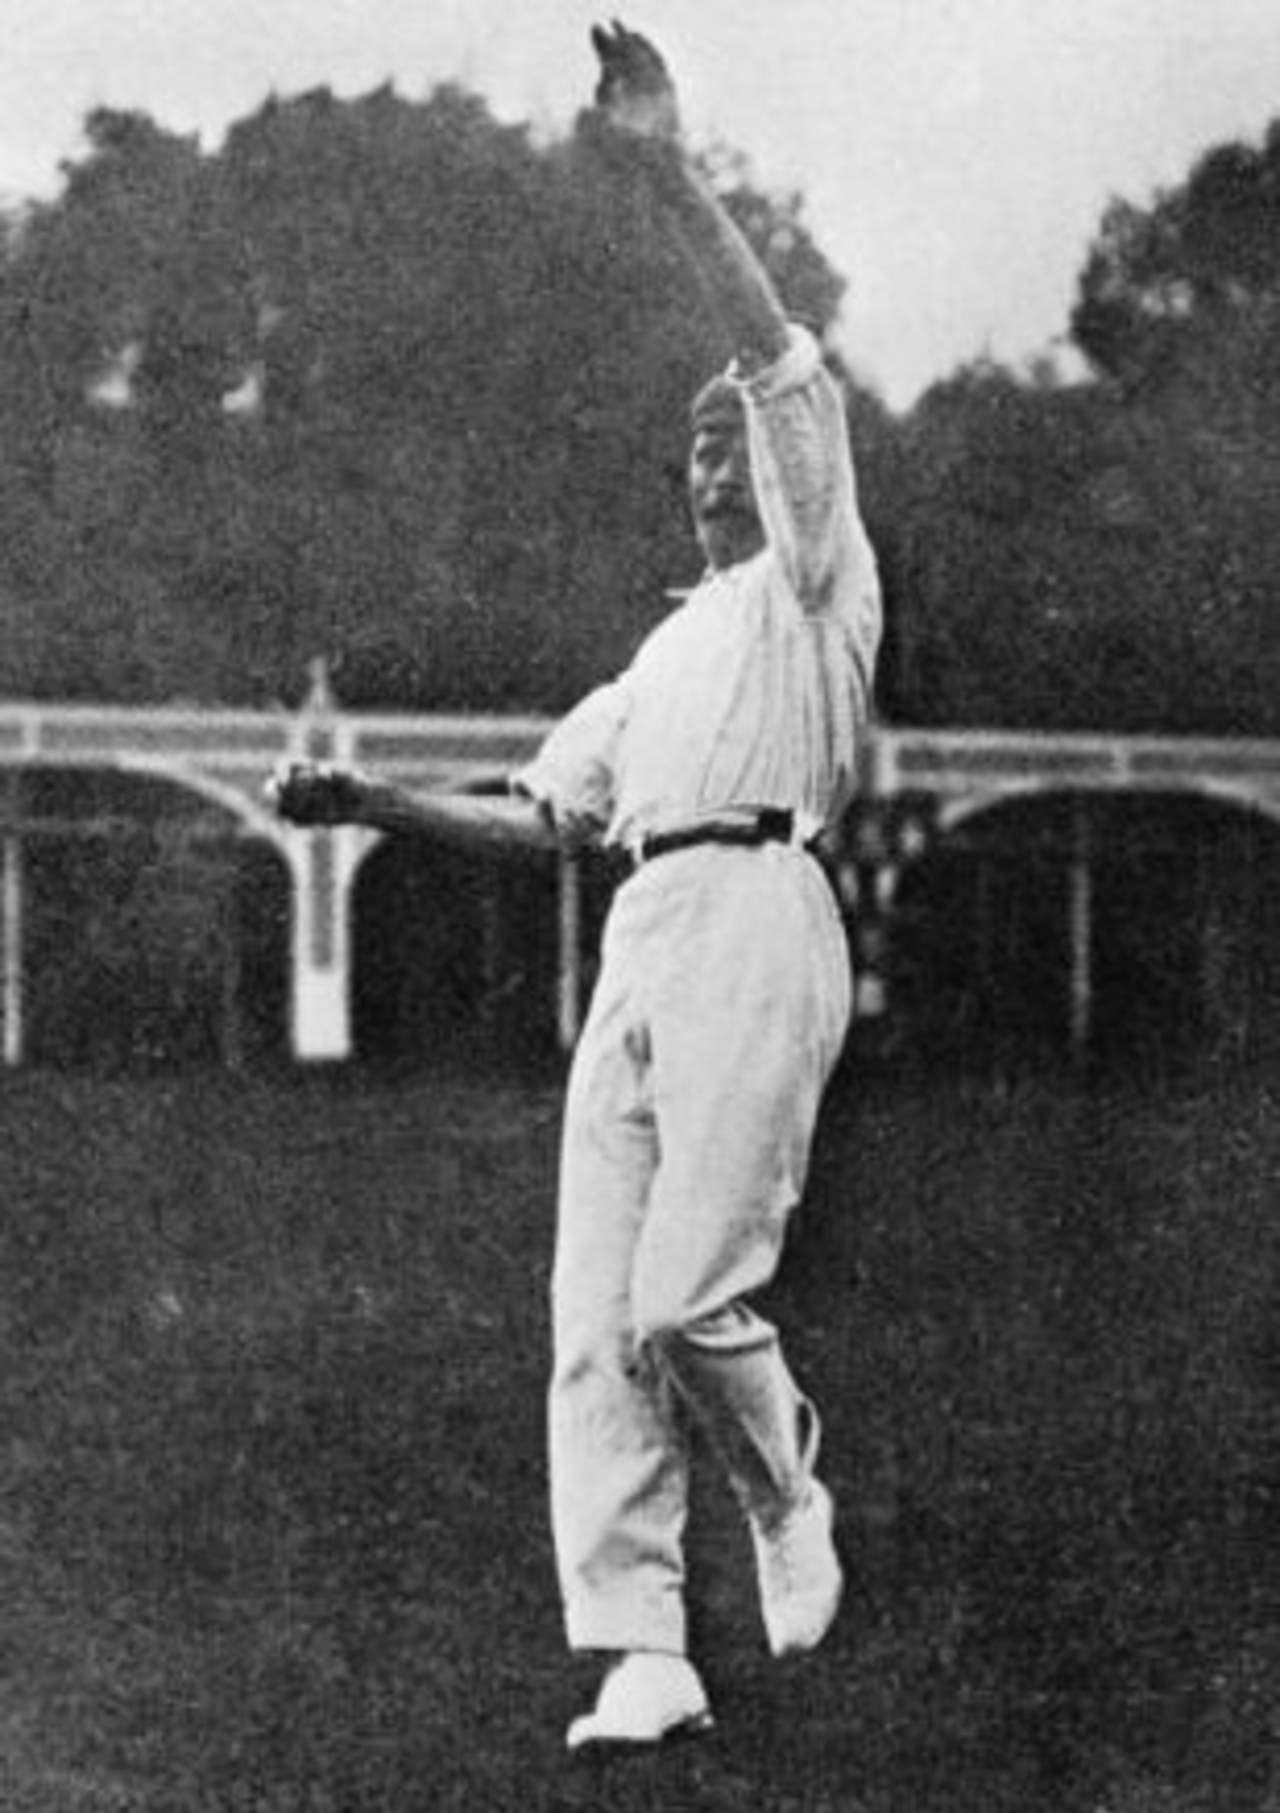 Sydney Barnes shows his bowling action, circa 1910